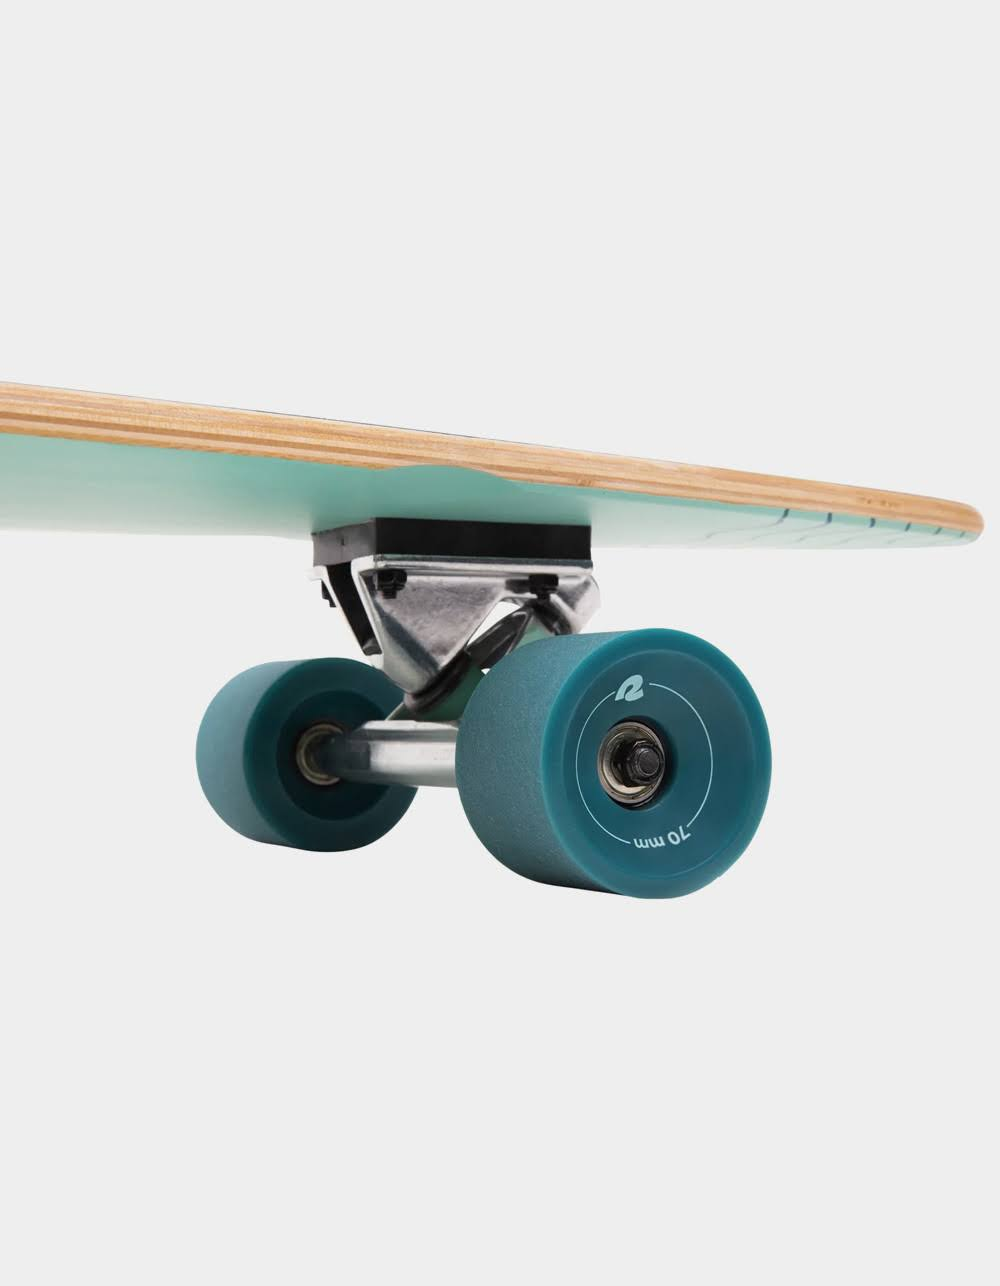 Retrospec Zed Bondi Wave 41″ Pintail Longboard Complete with Skate Tool